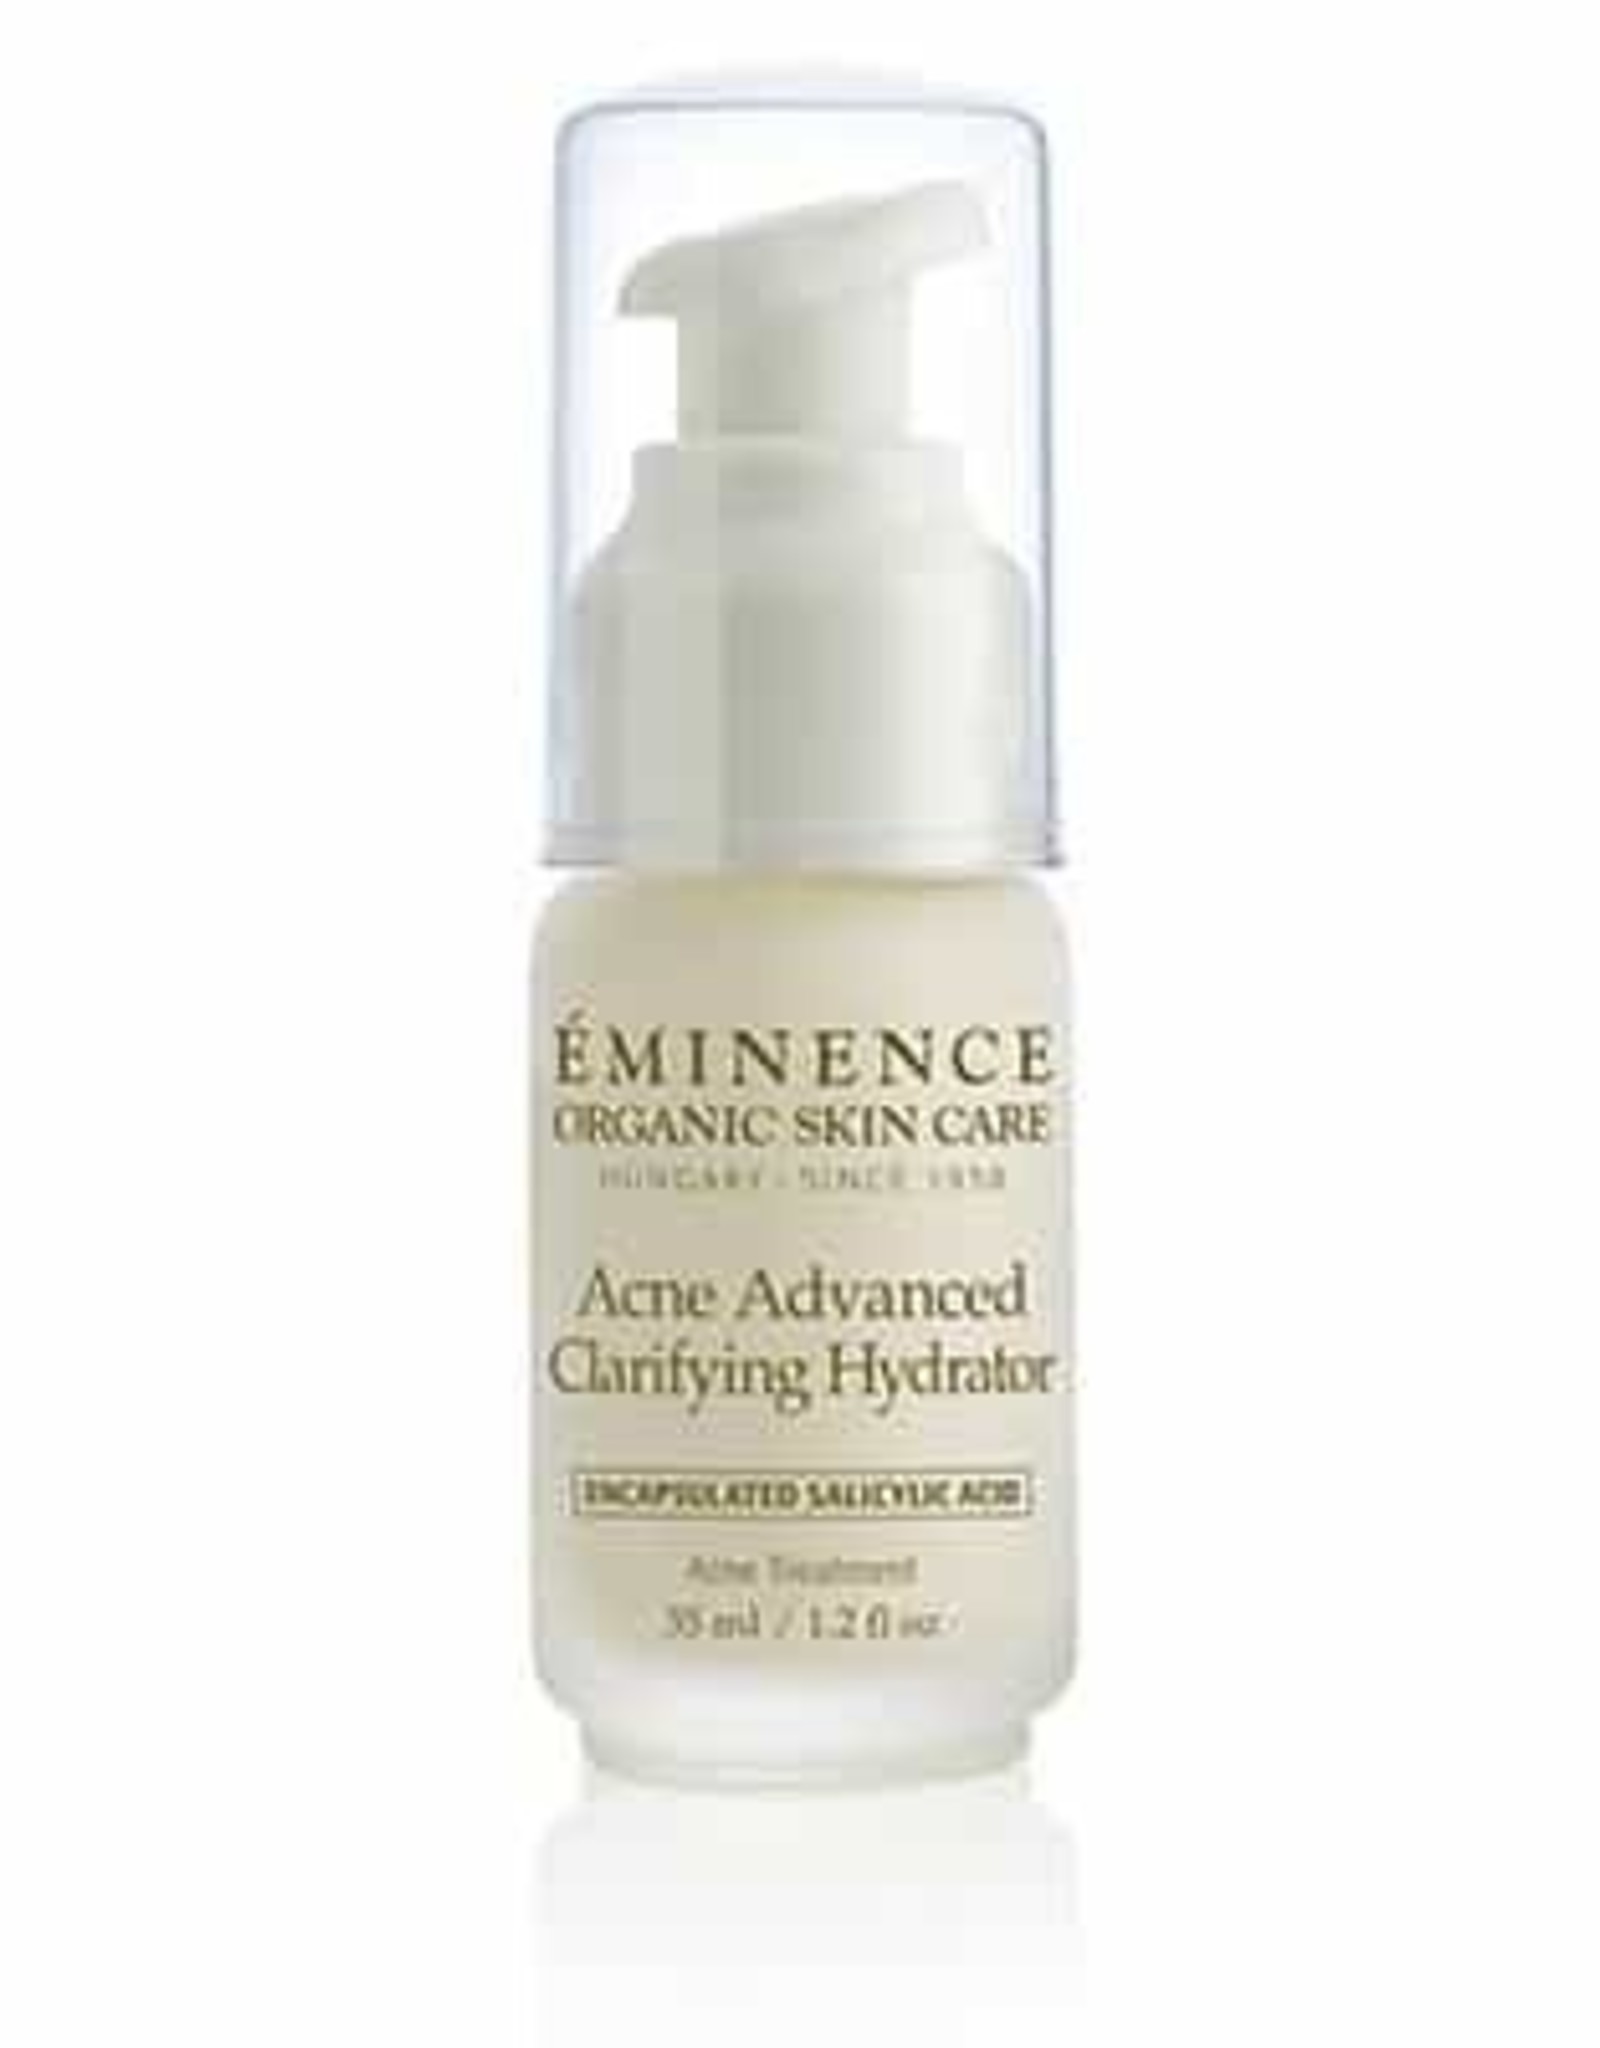 Eminence Acne Advanced Clarifying Hydrator